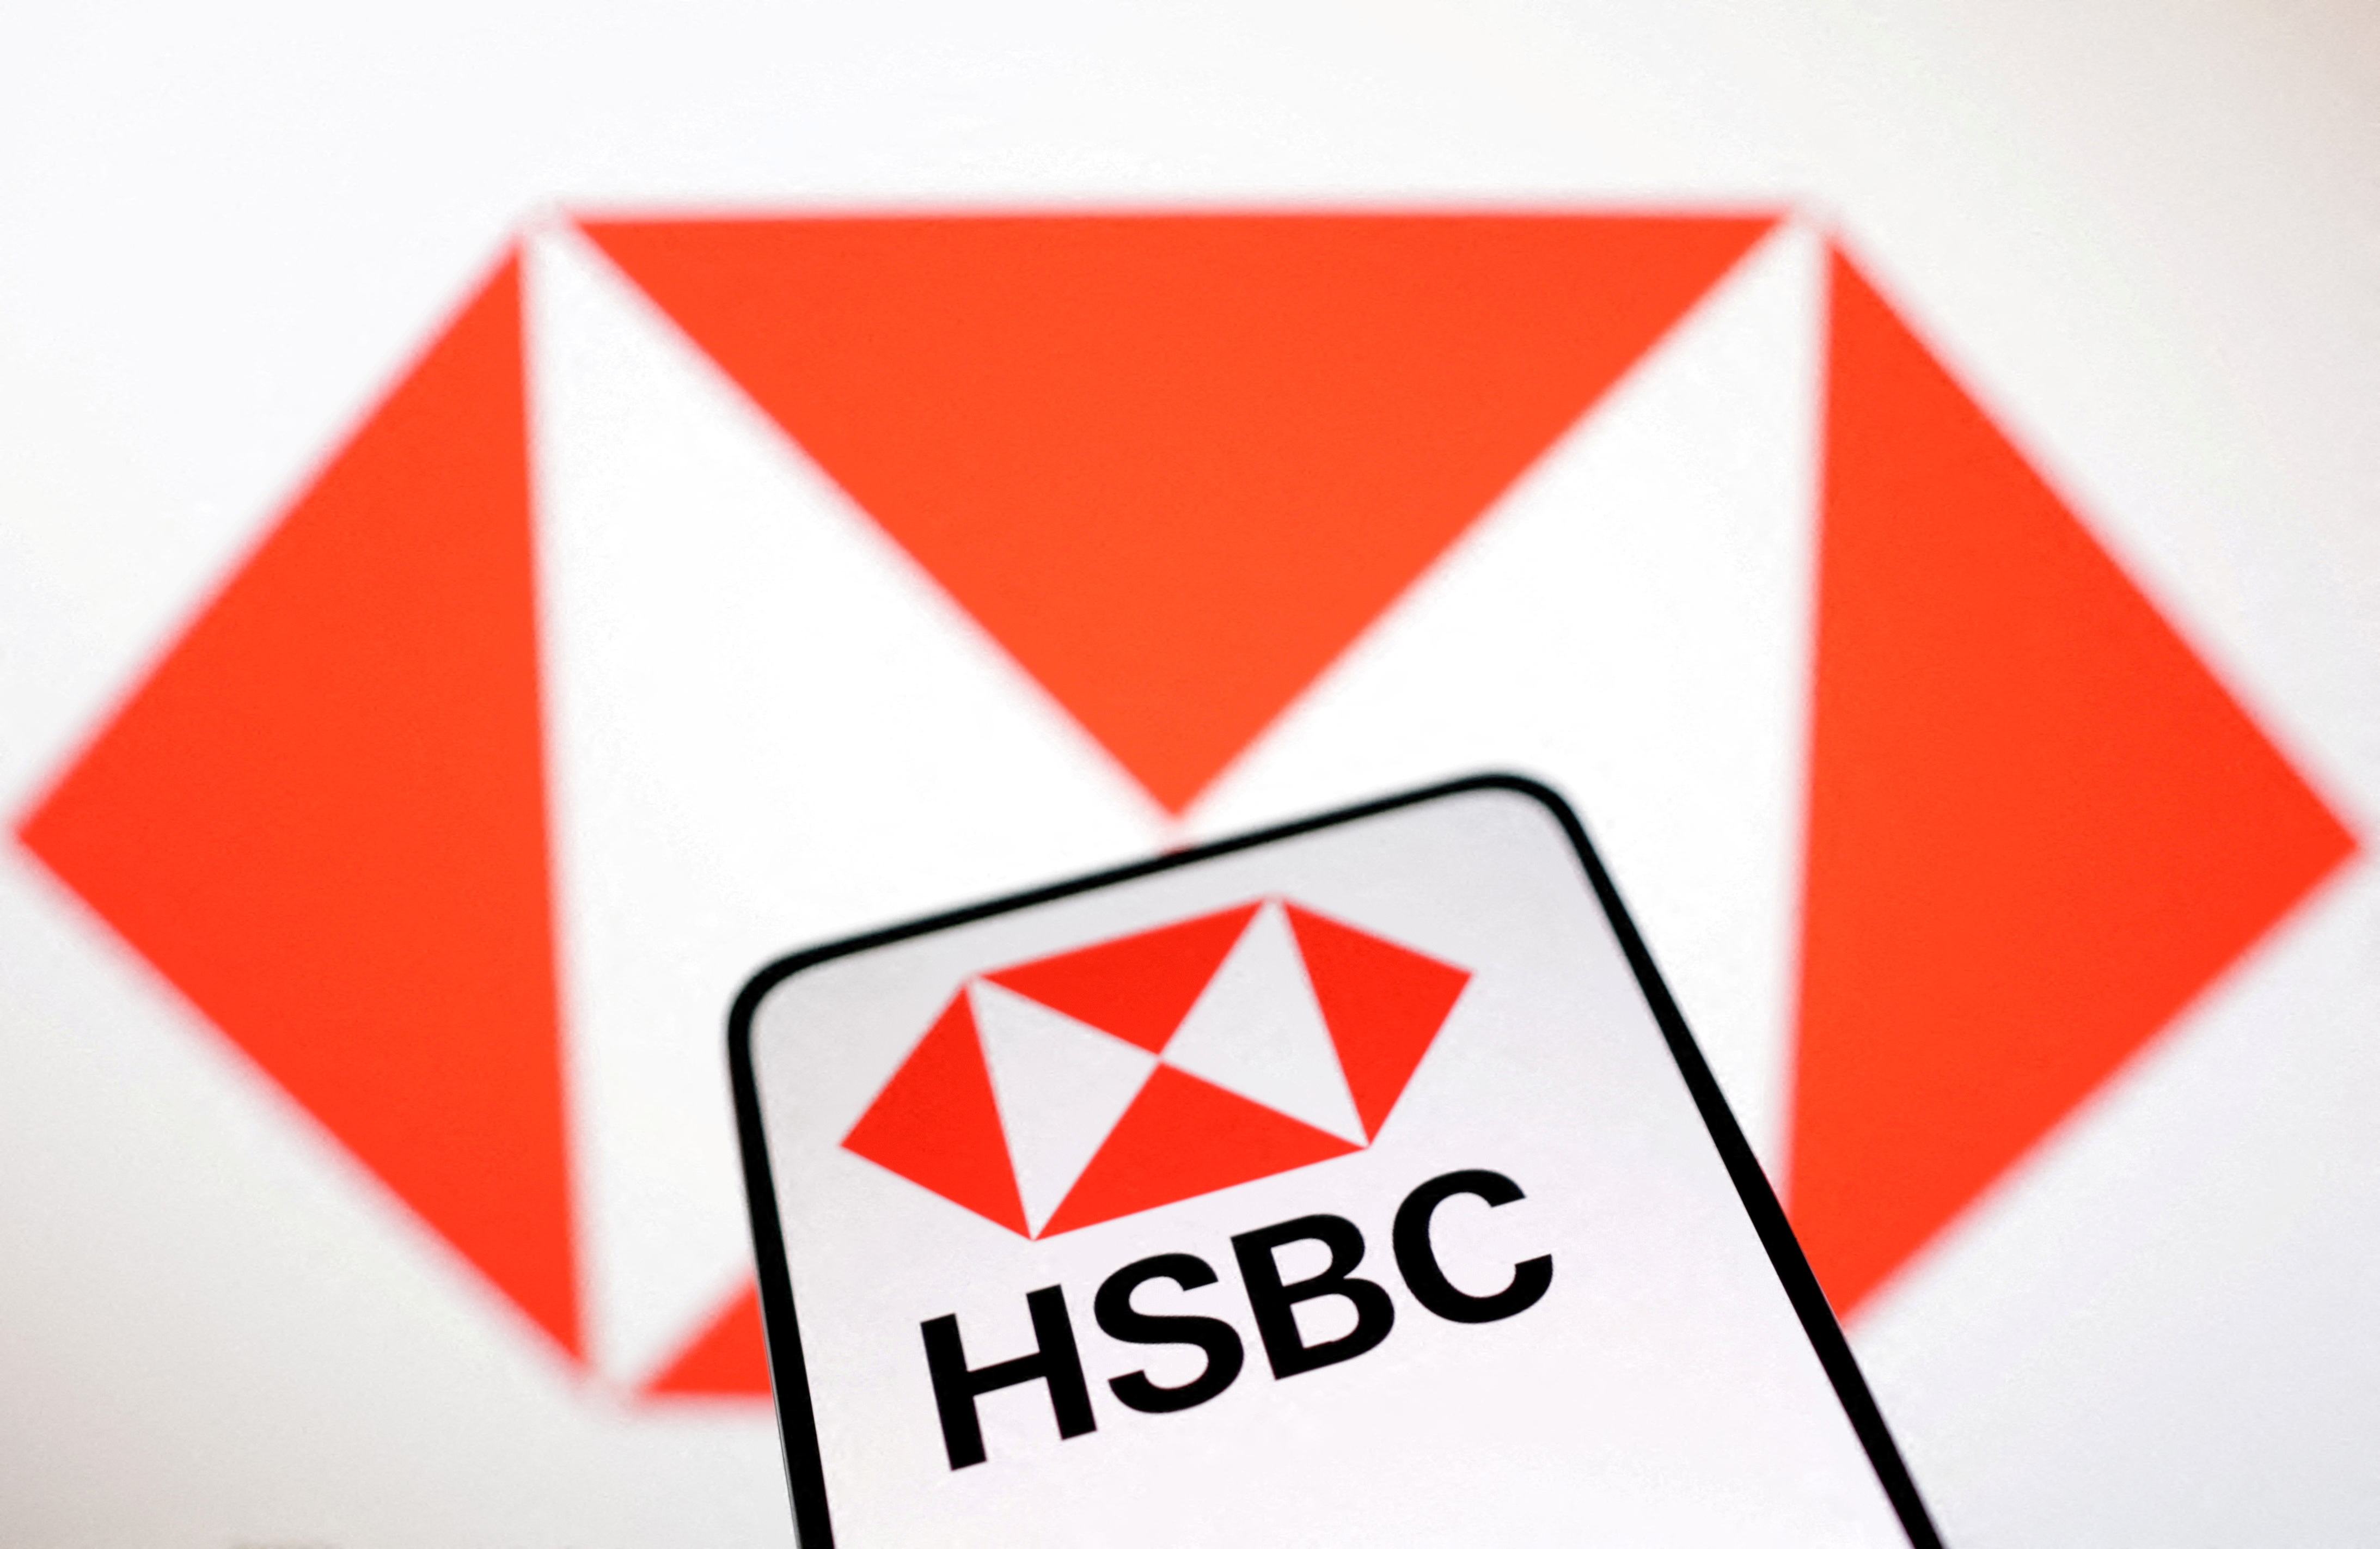 Illustration shows HSBC Bank logo